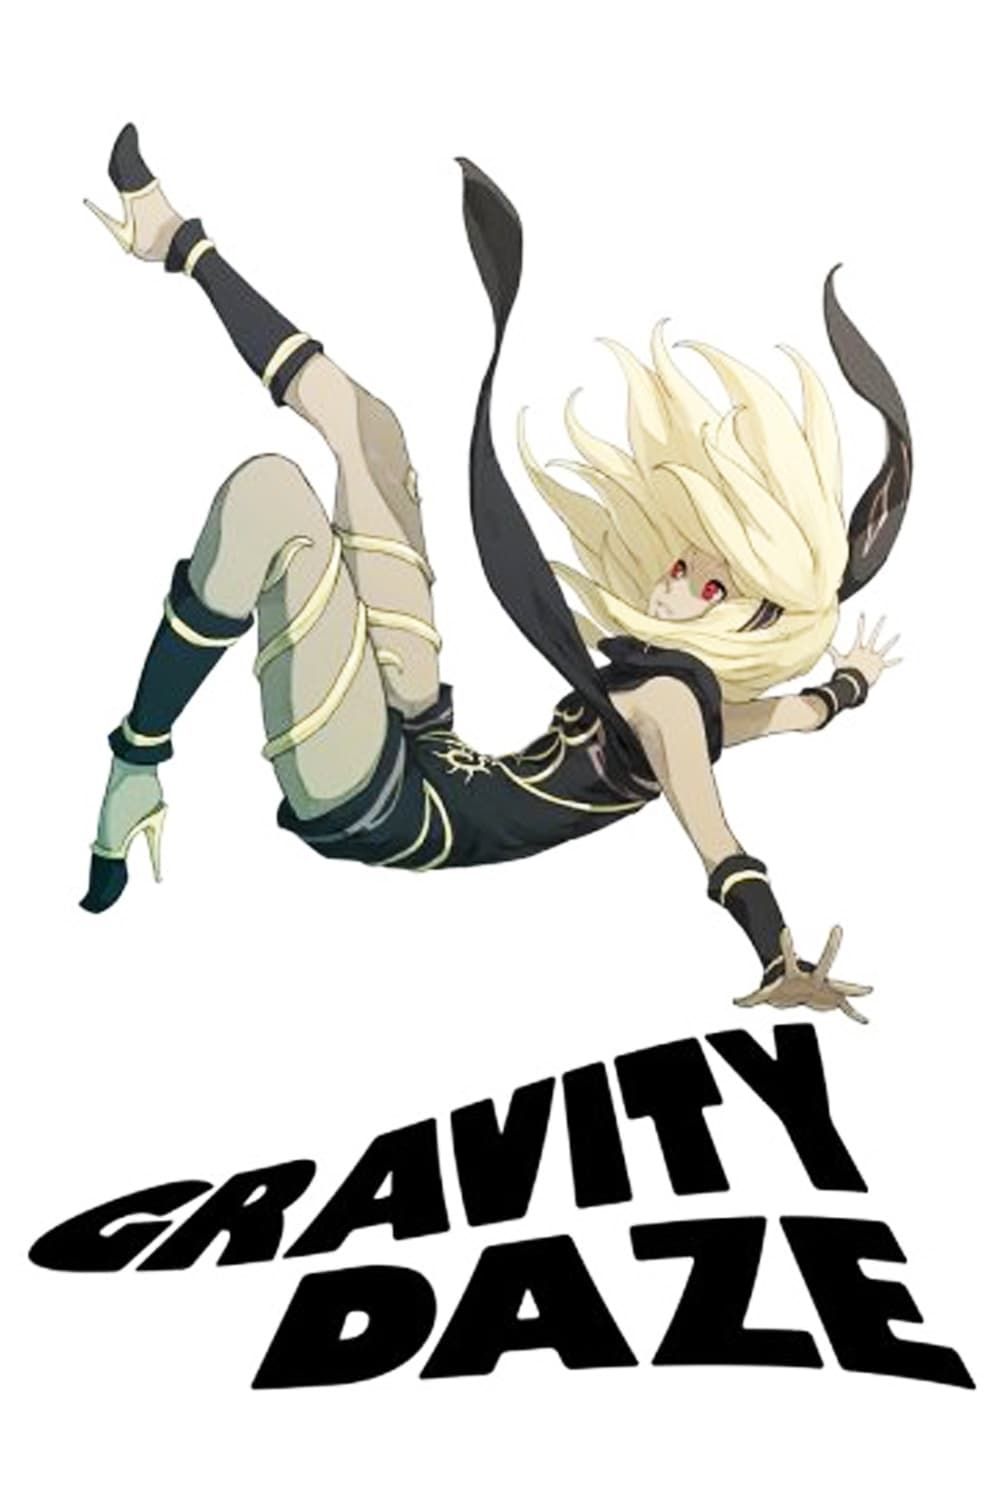 [Most Viewed] Gravity Daze The Animation: Ouverture (OVA) (Sub)